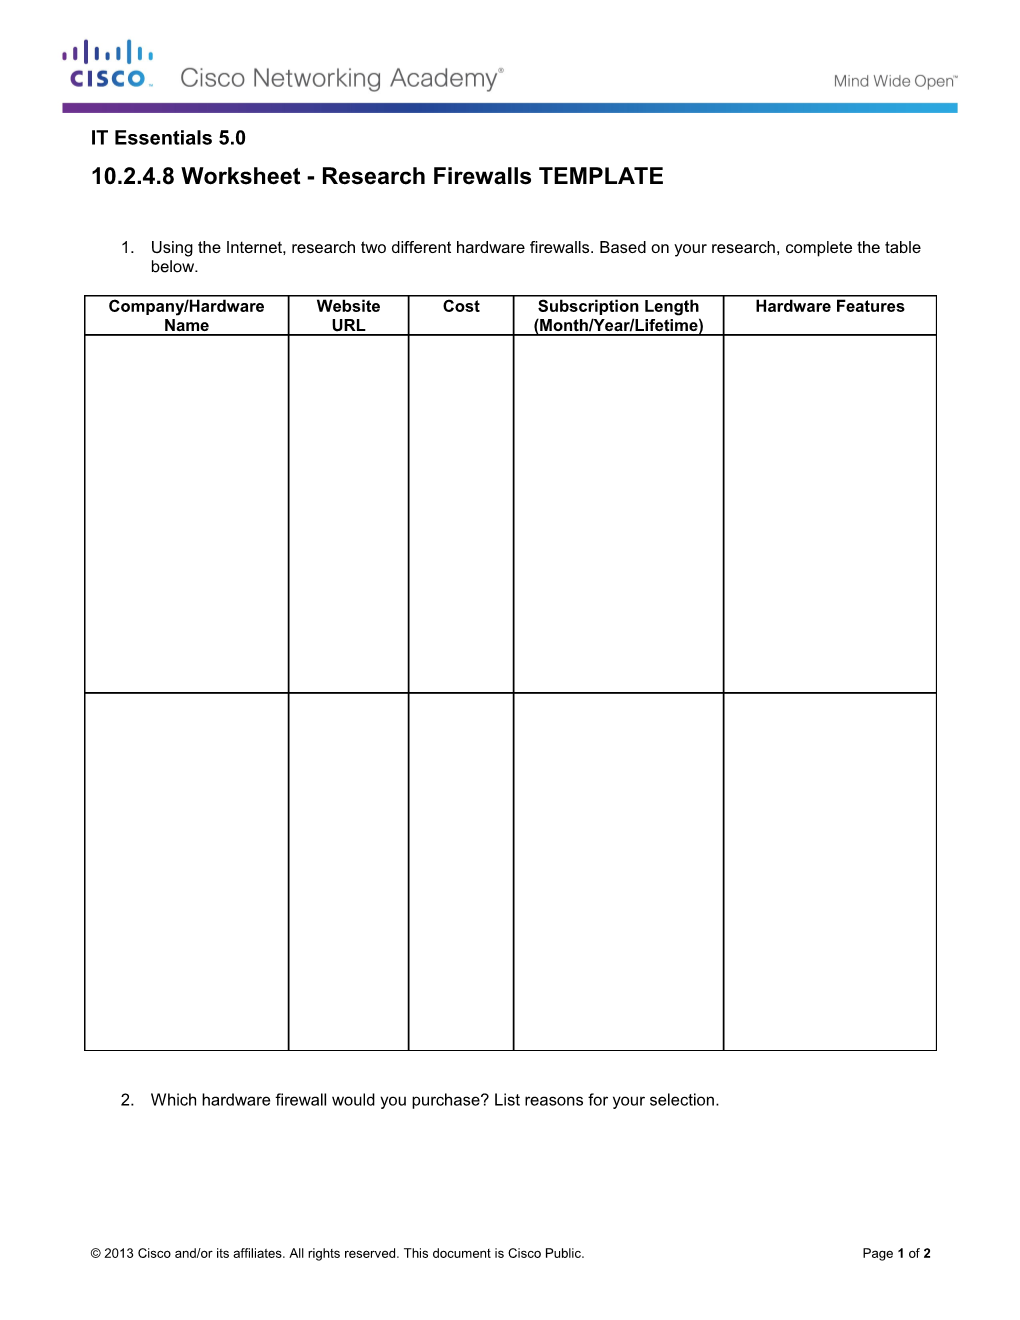 10.2.4.8 Worksheet - Research Firewalls TEMPLATE